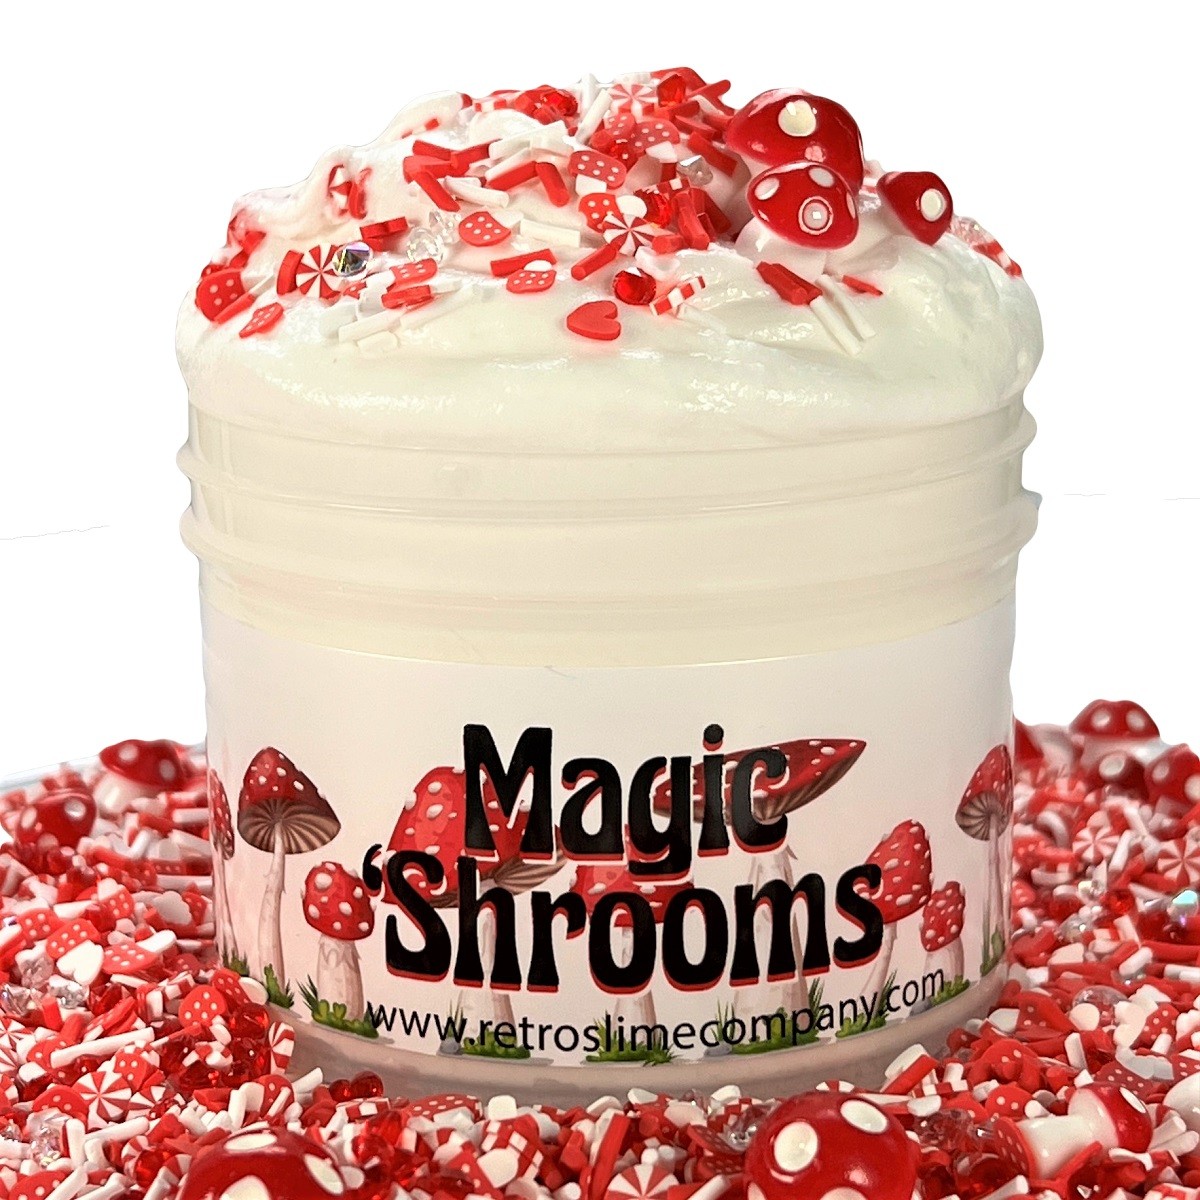 Magic 'Shrooms Cloud Cream Slime - Retro Slime Company